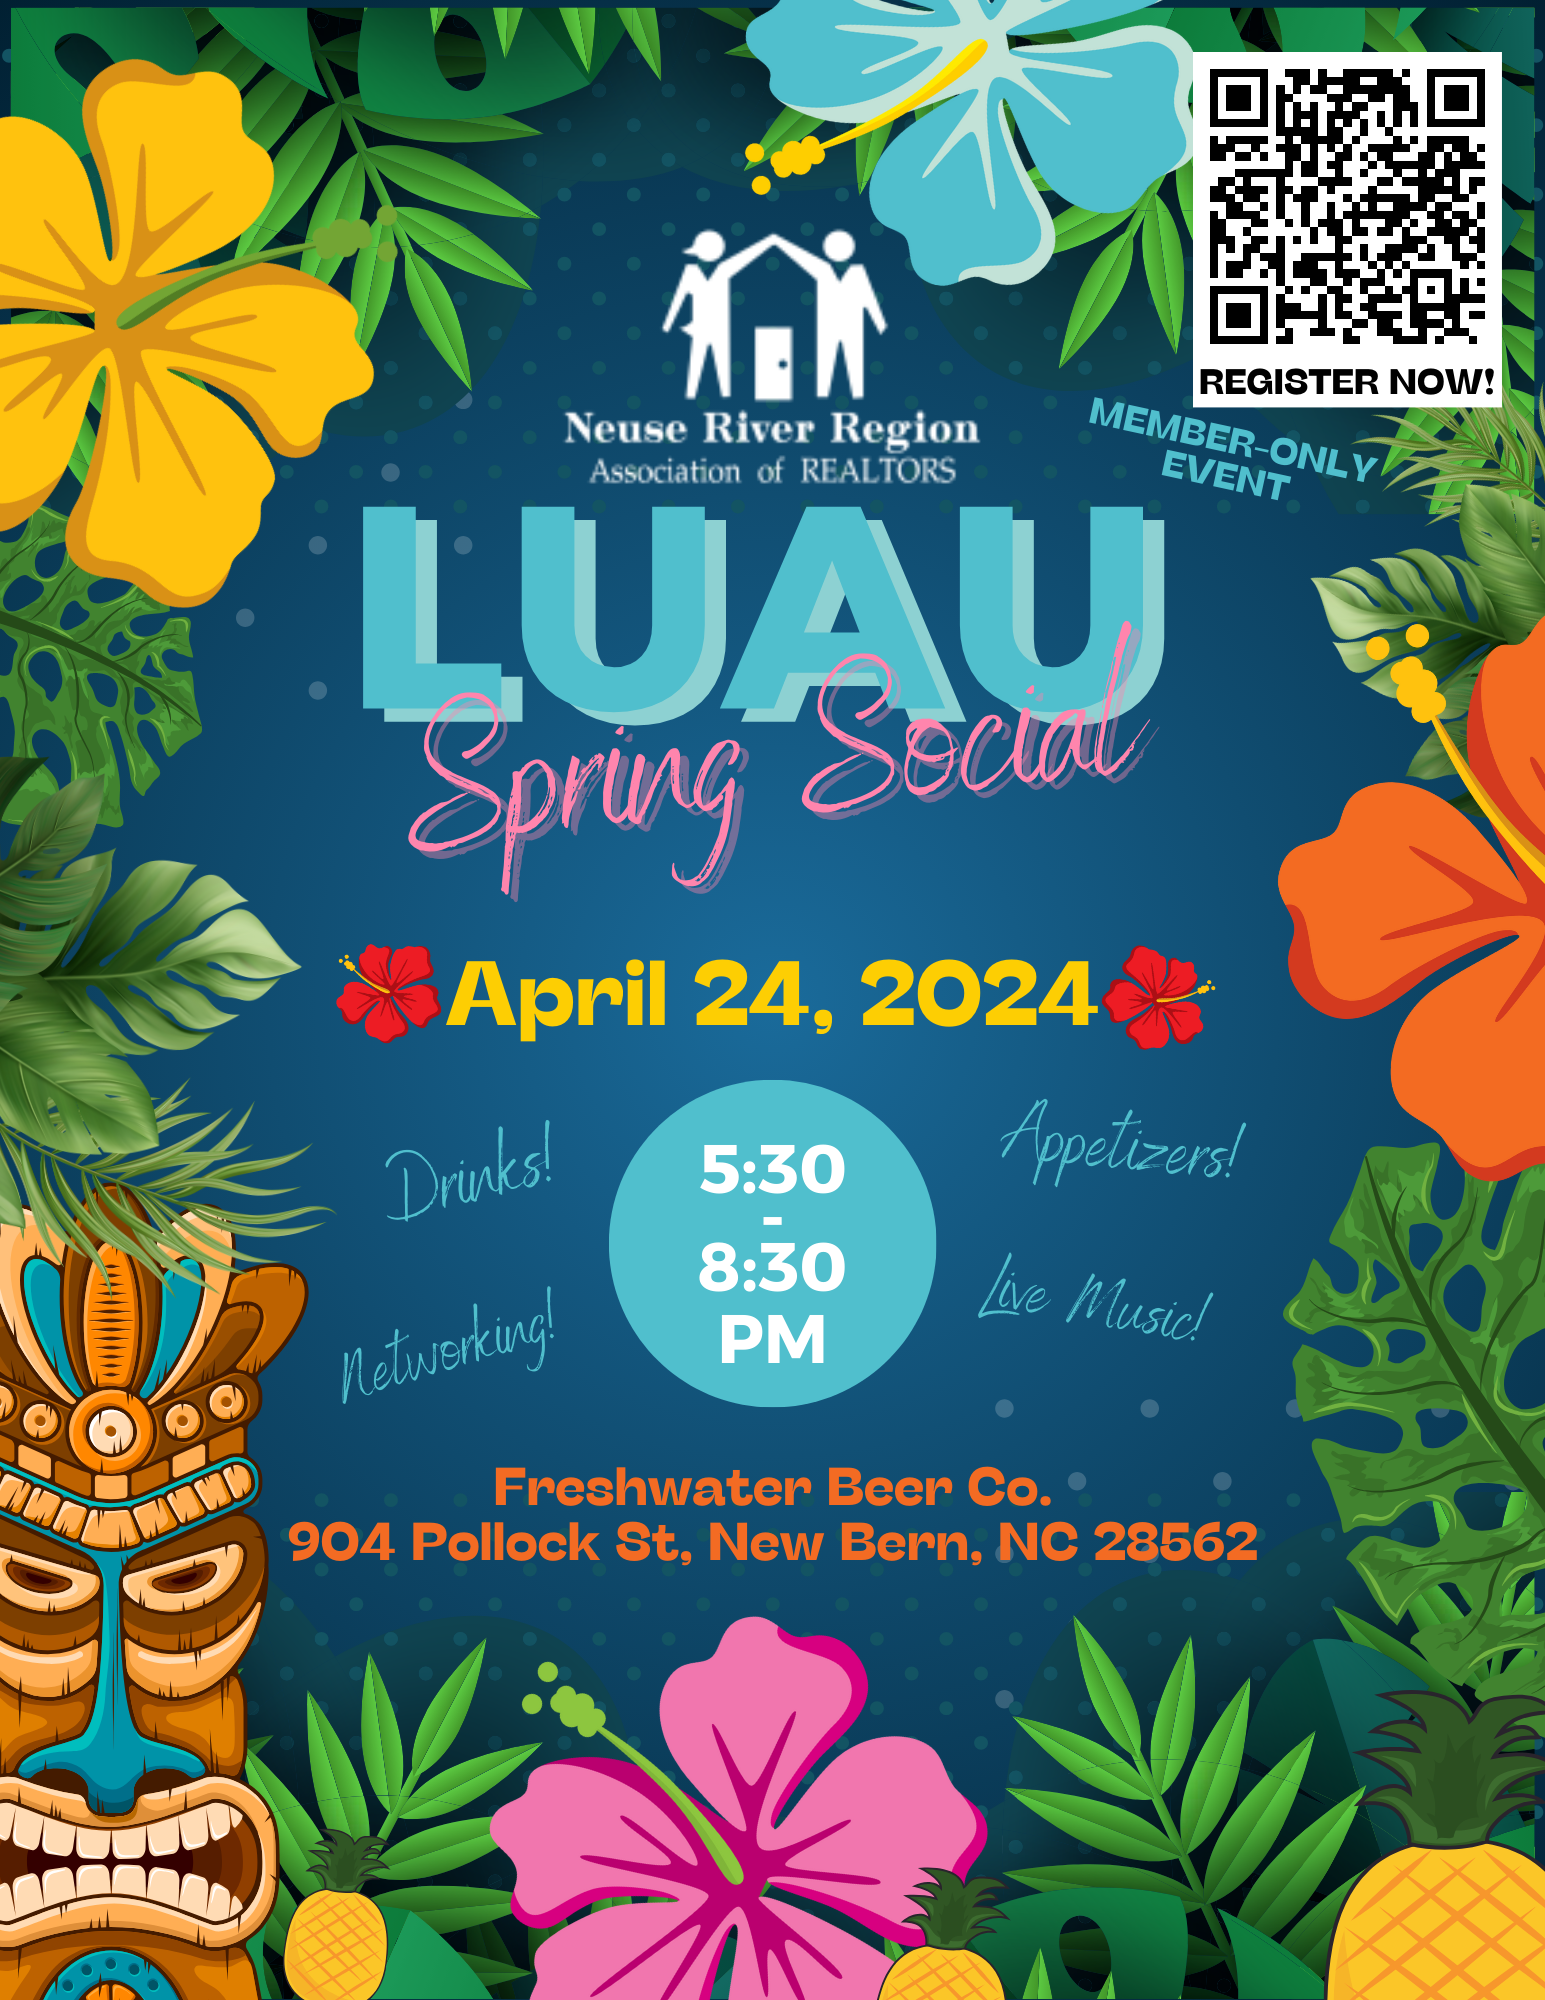 Luau Spring Social 2024